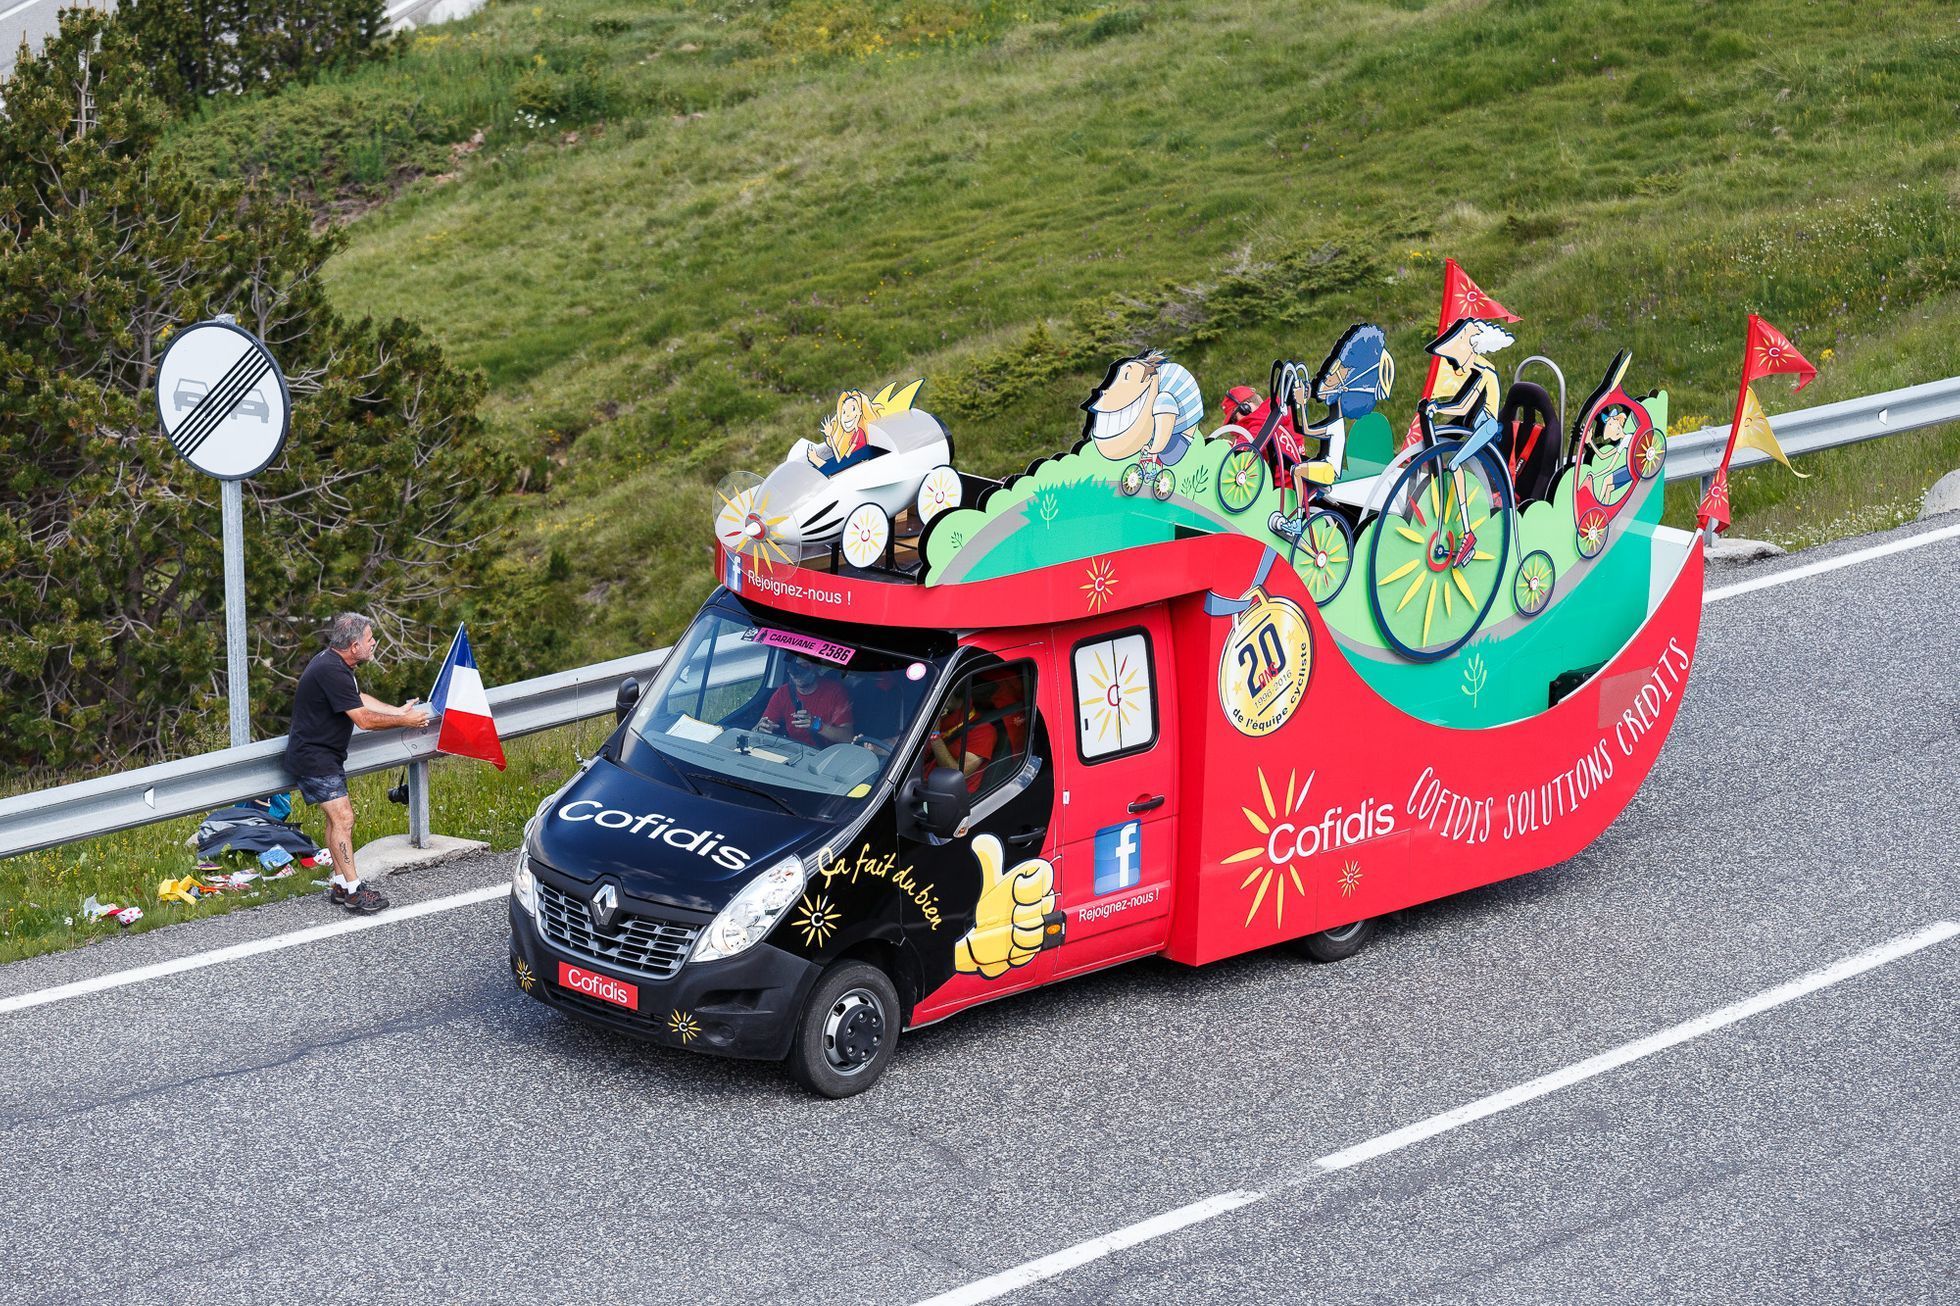 Reklamní karavana na Tour de France